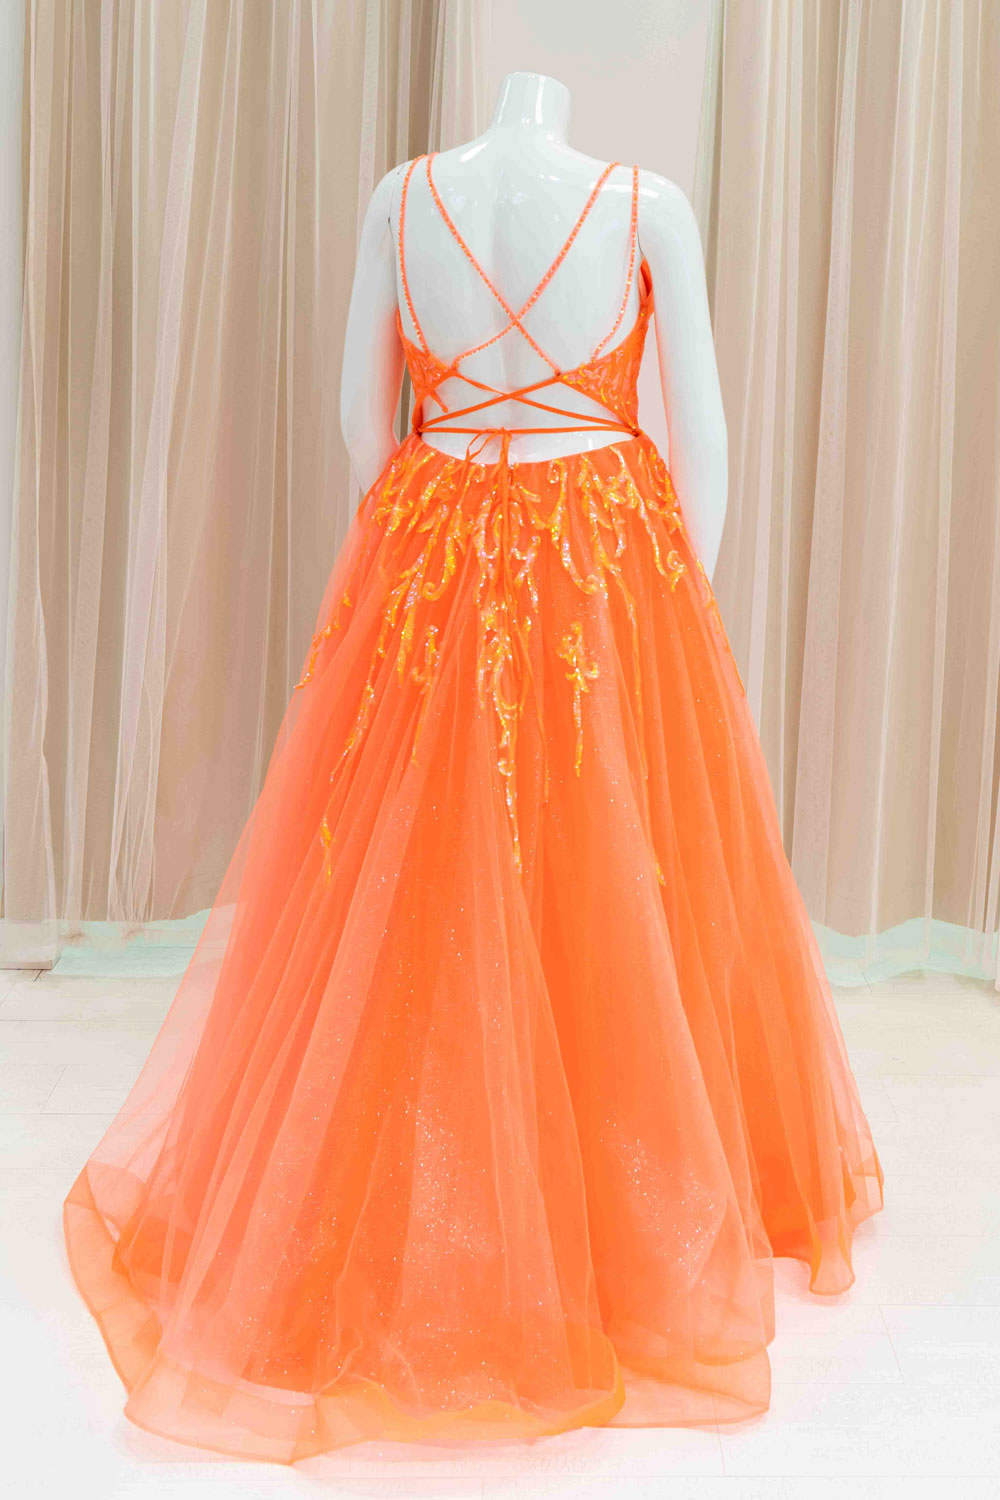 Glitter Tulle Ball Gown in Orange